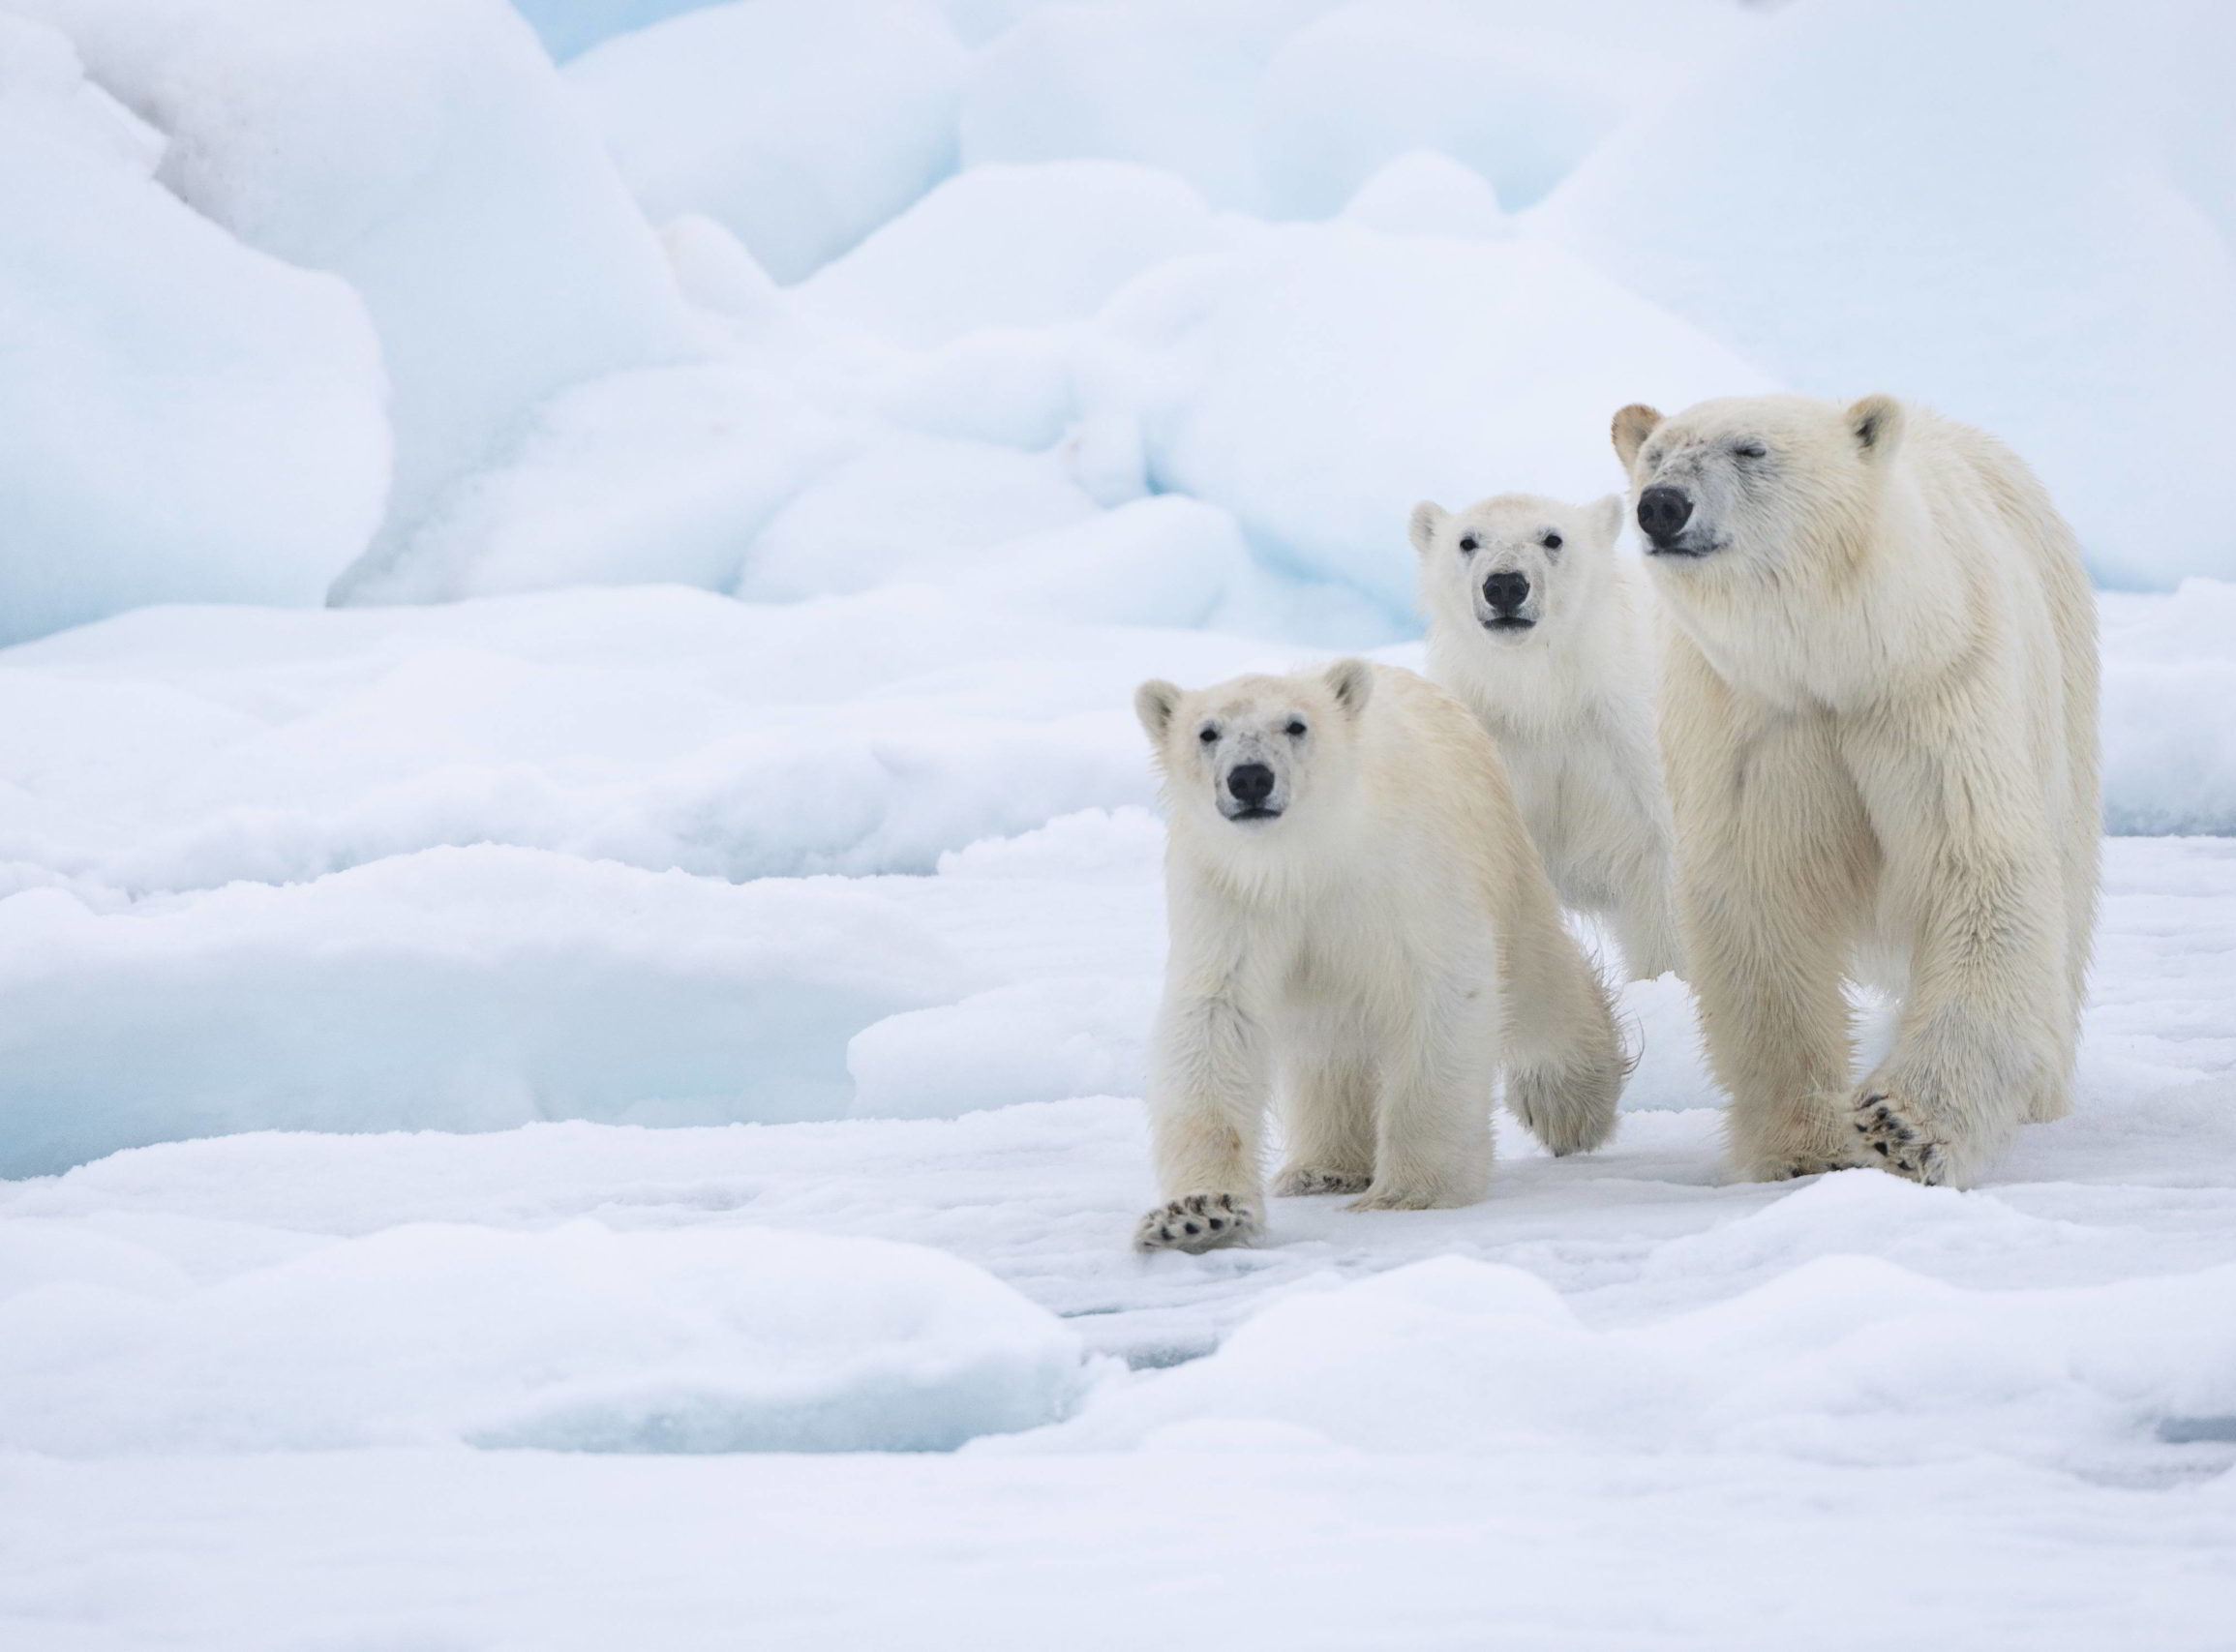 The Polar Bear: Ontario's arctic giant